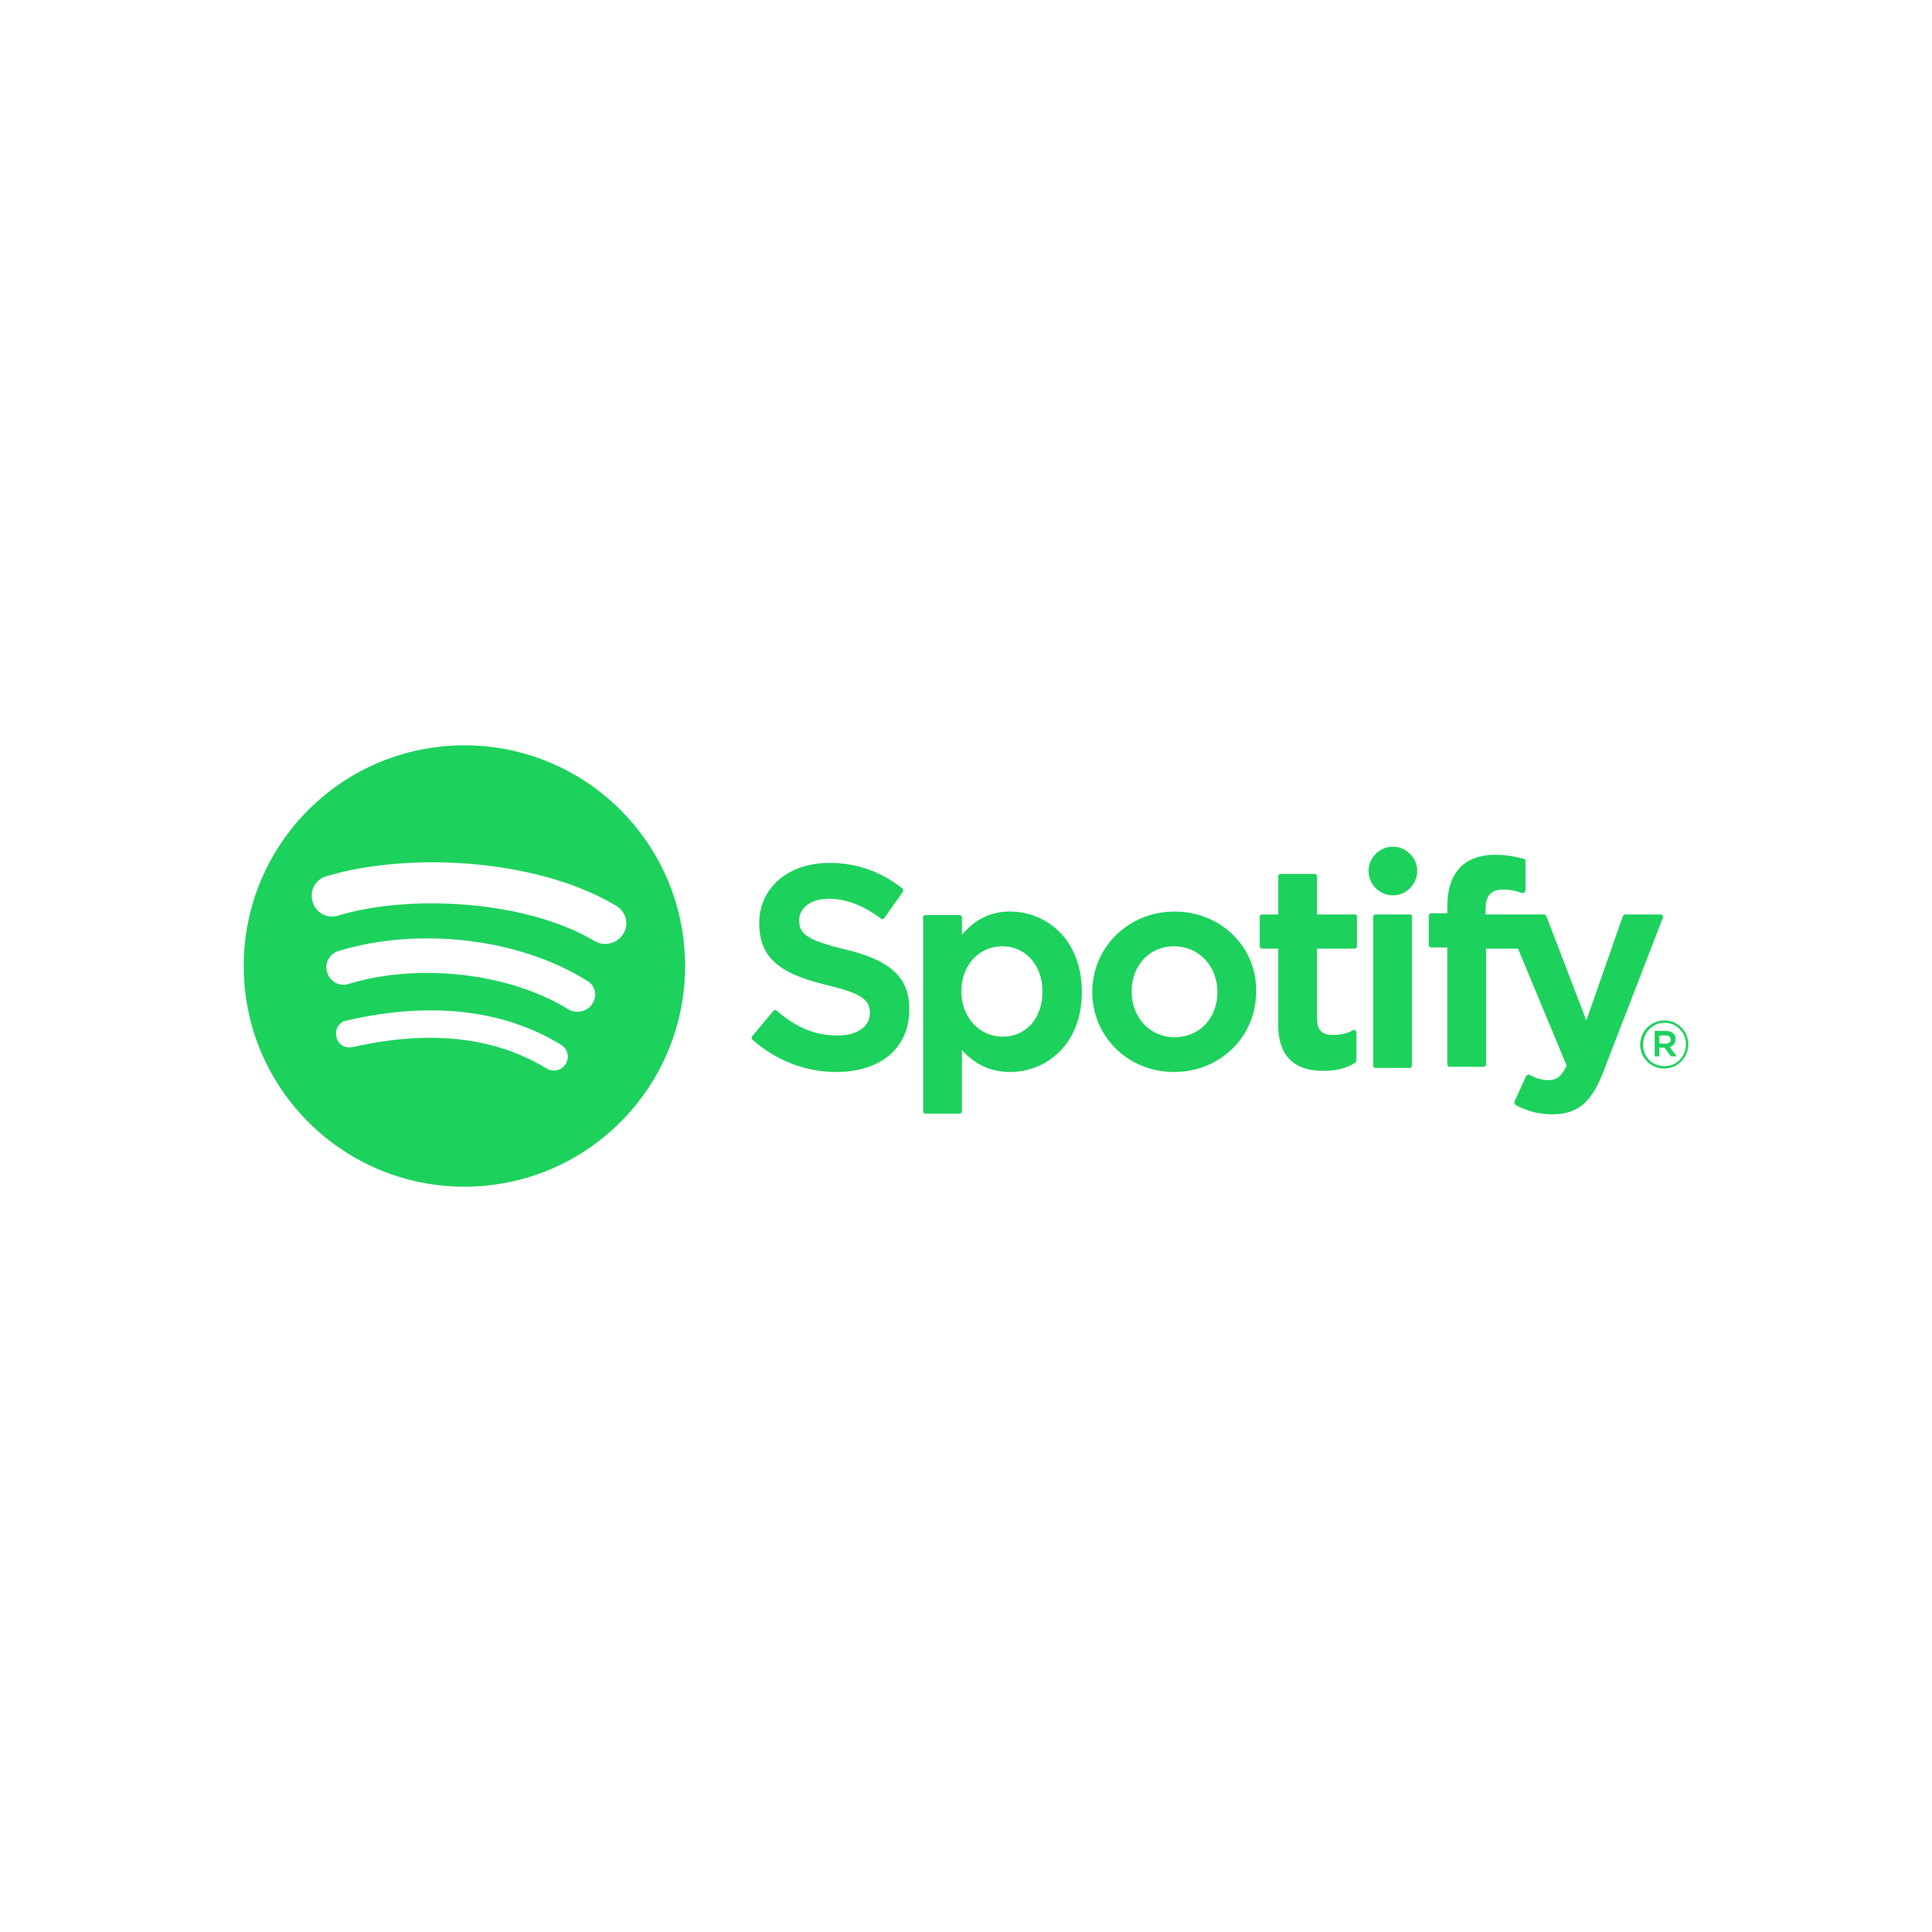 spotify logo 0 - Spotify Logo